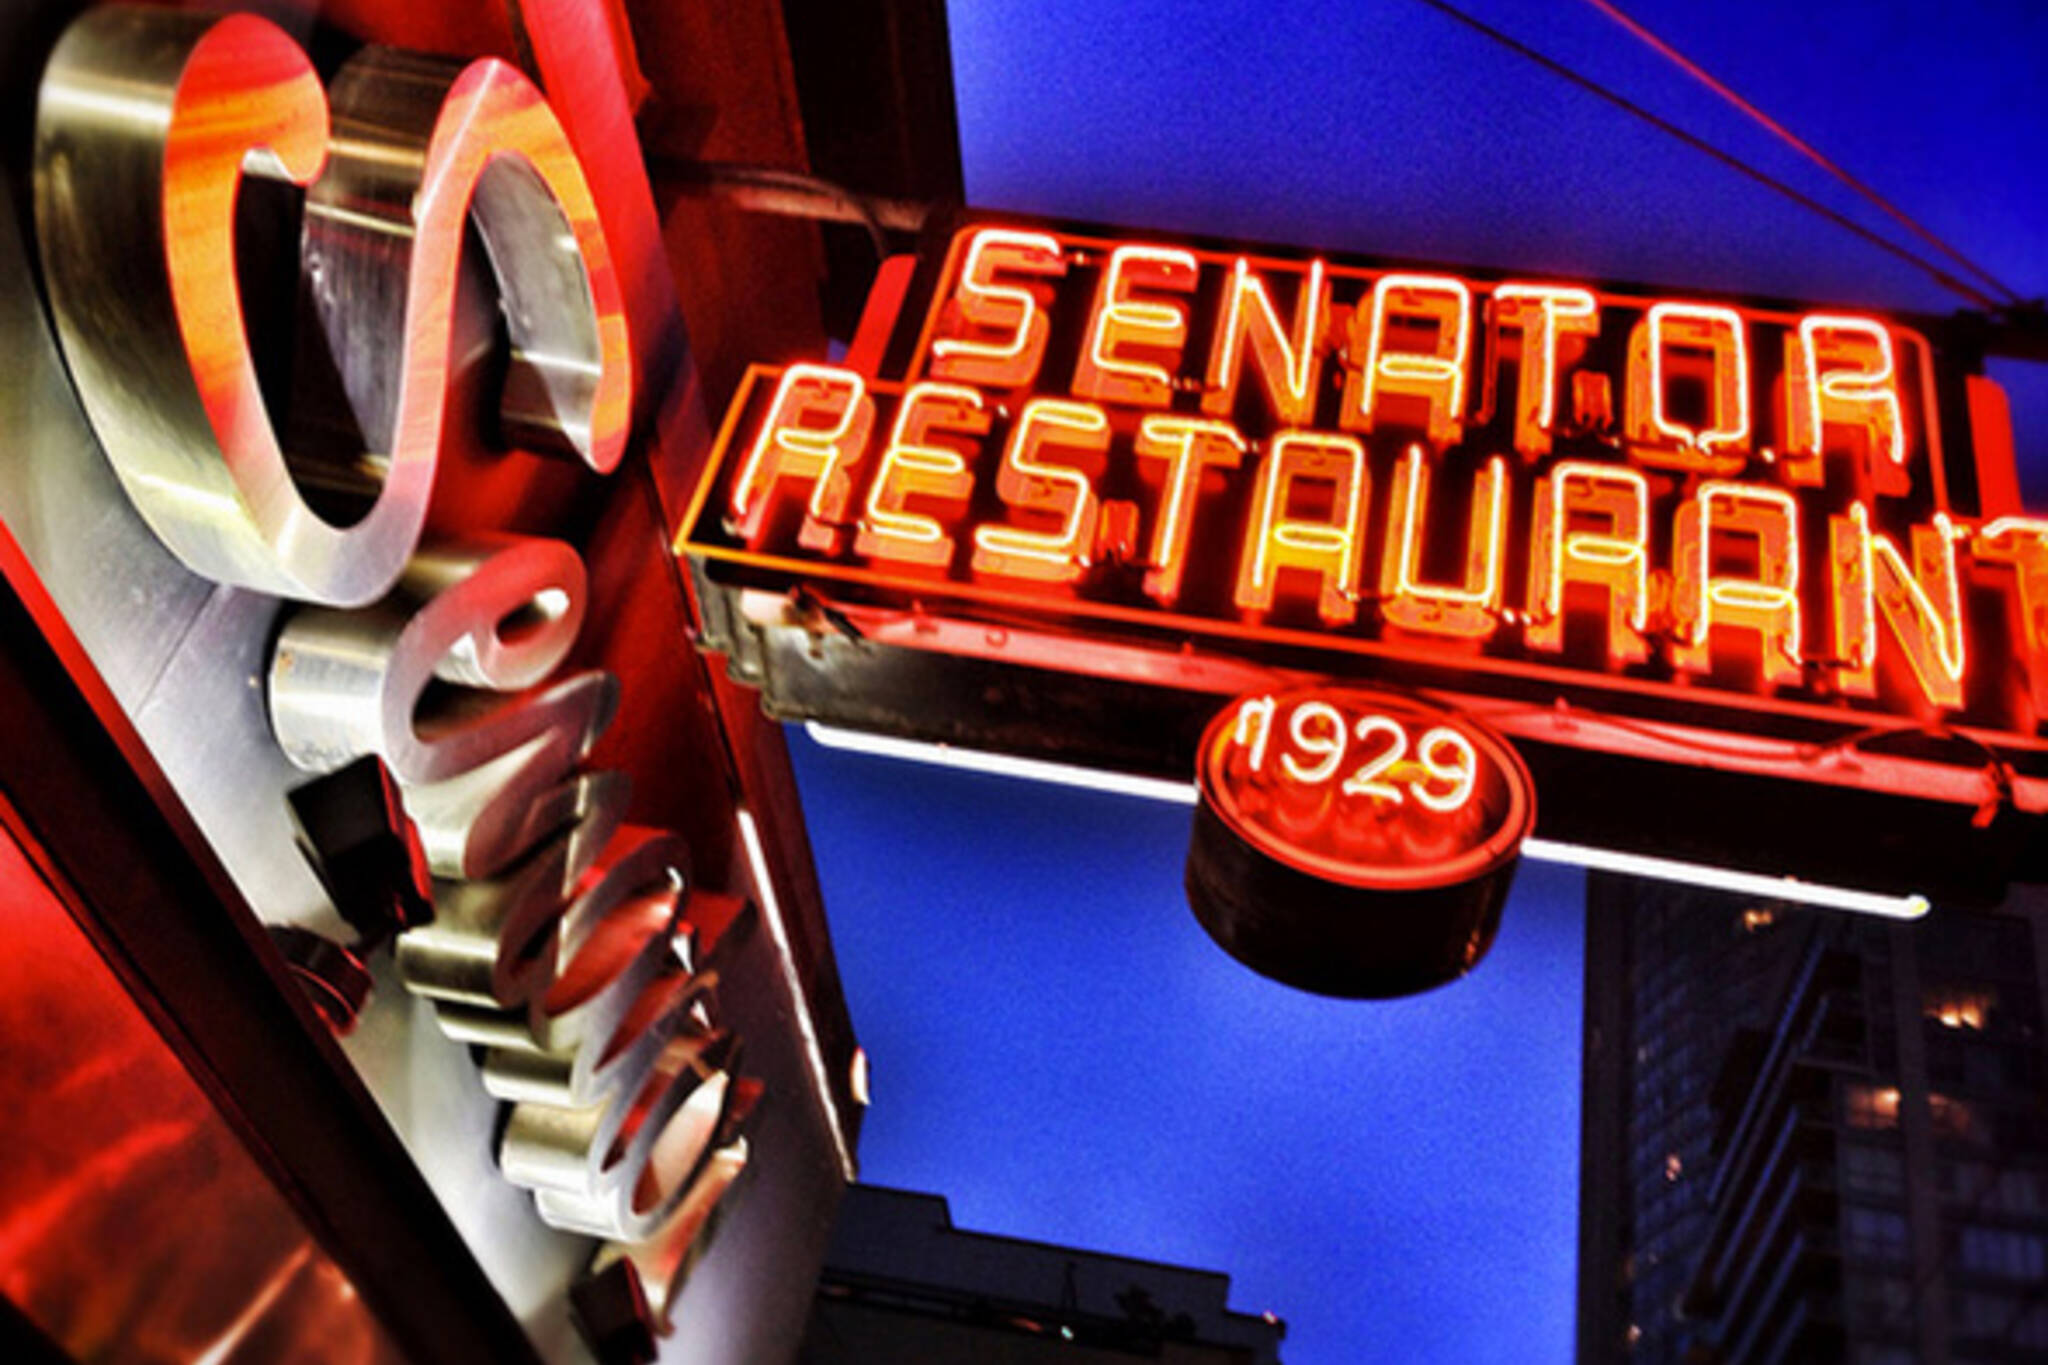 Senator restaurant toronto